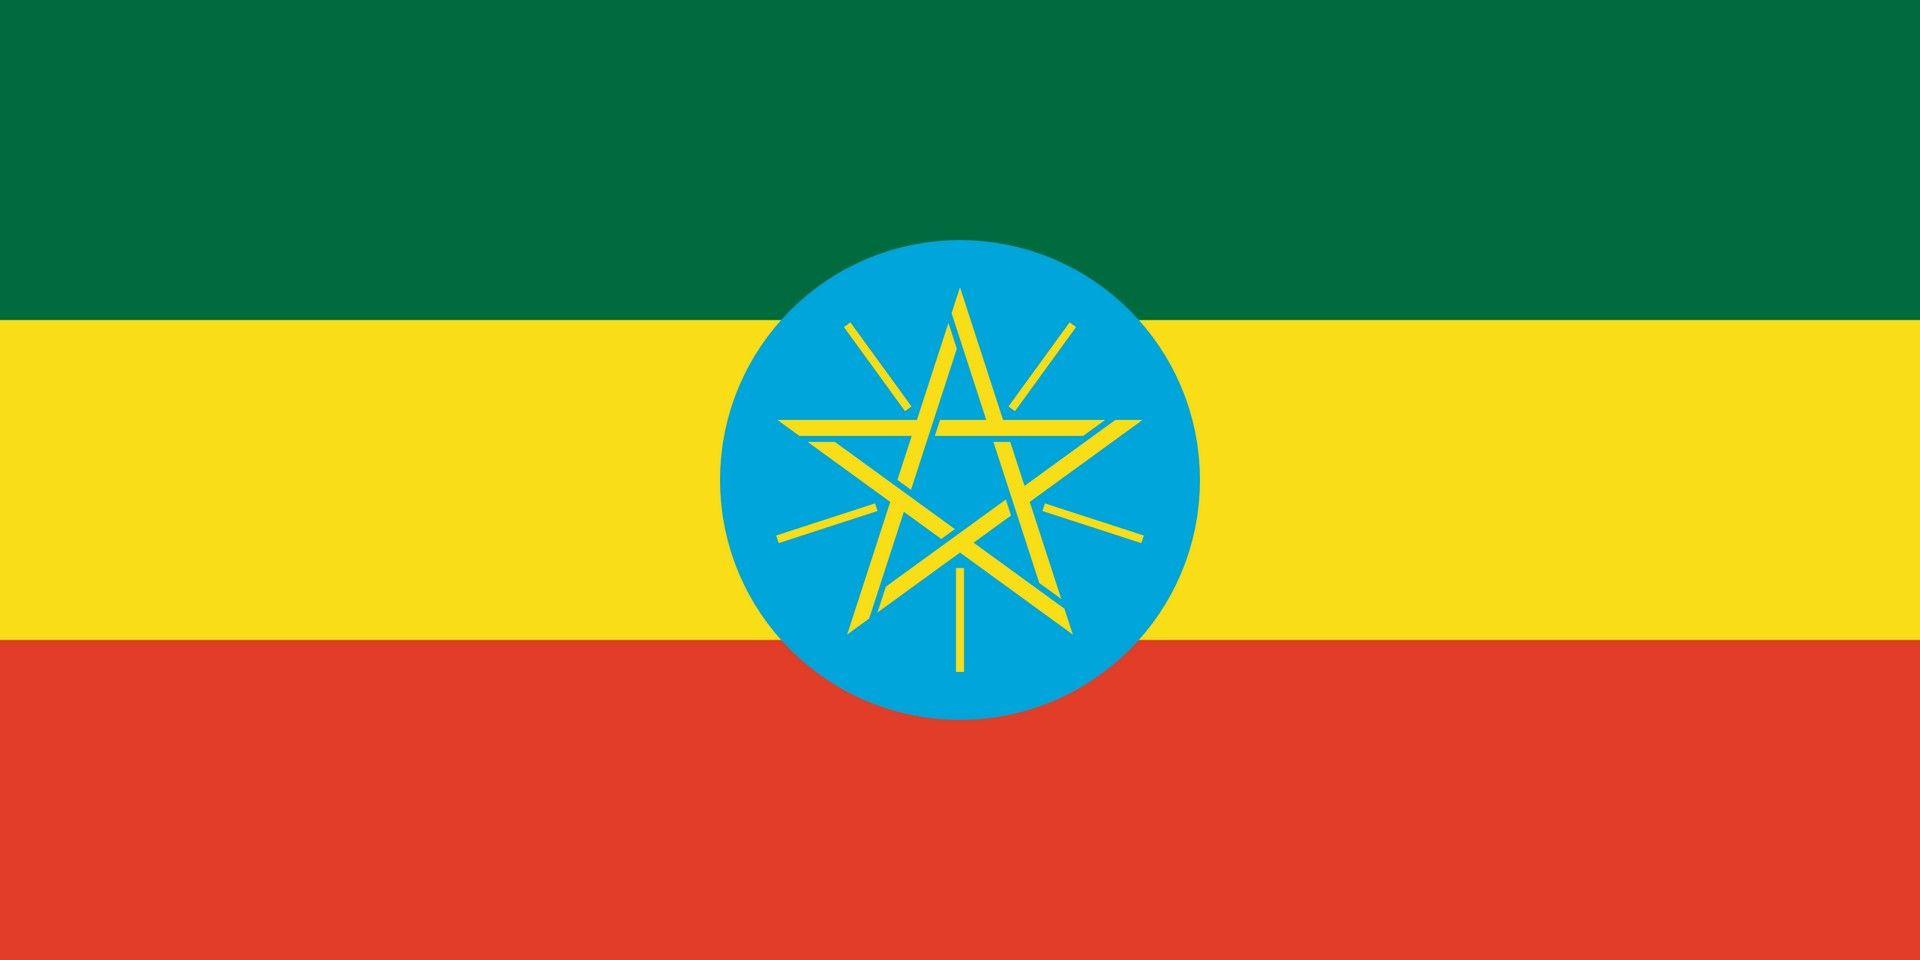 Flag of Ethiopia wallpaper. Flags wallpaper. Flag